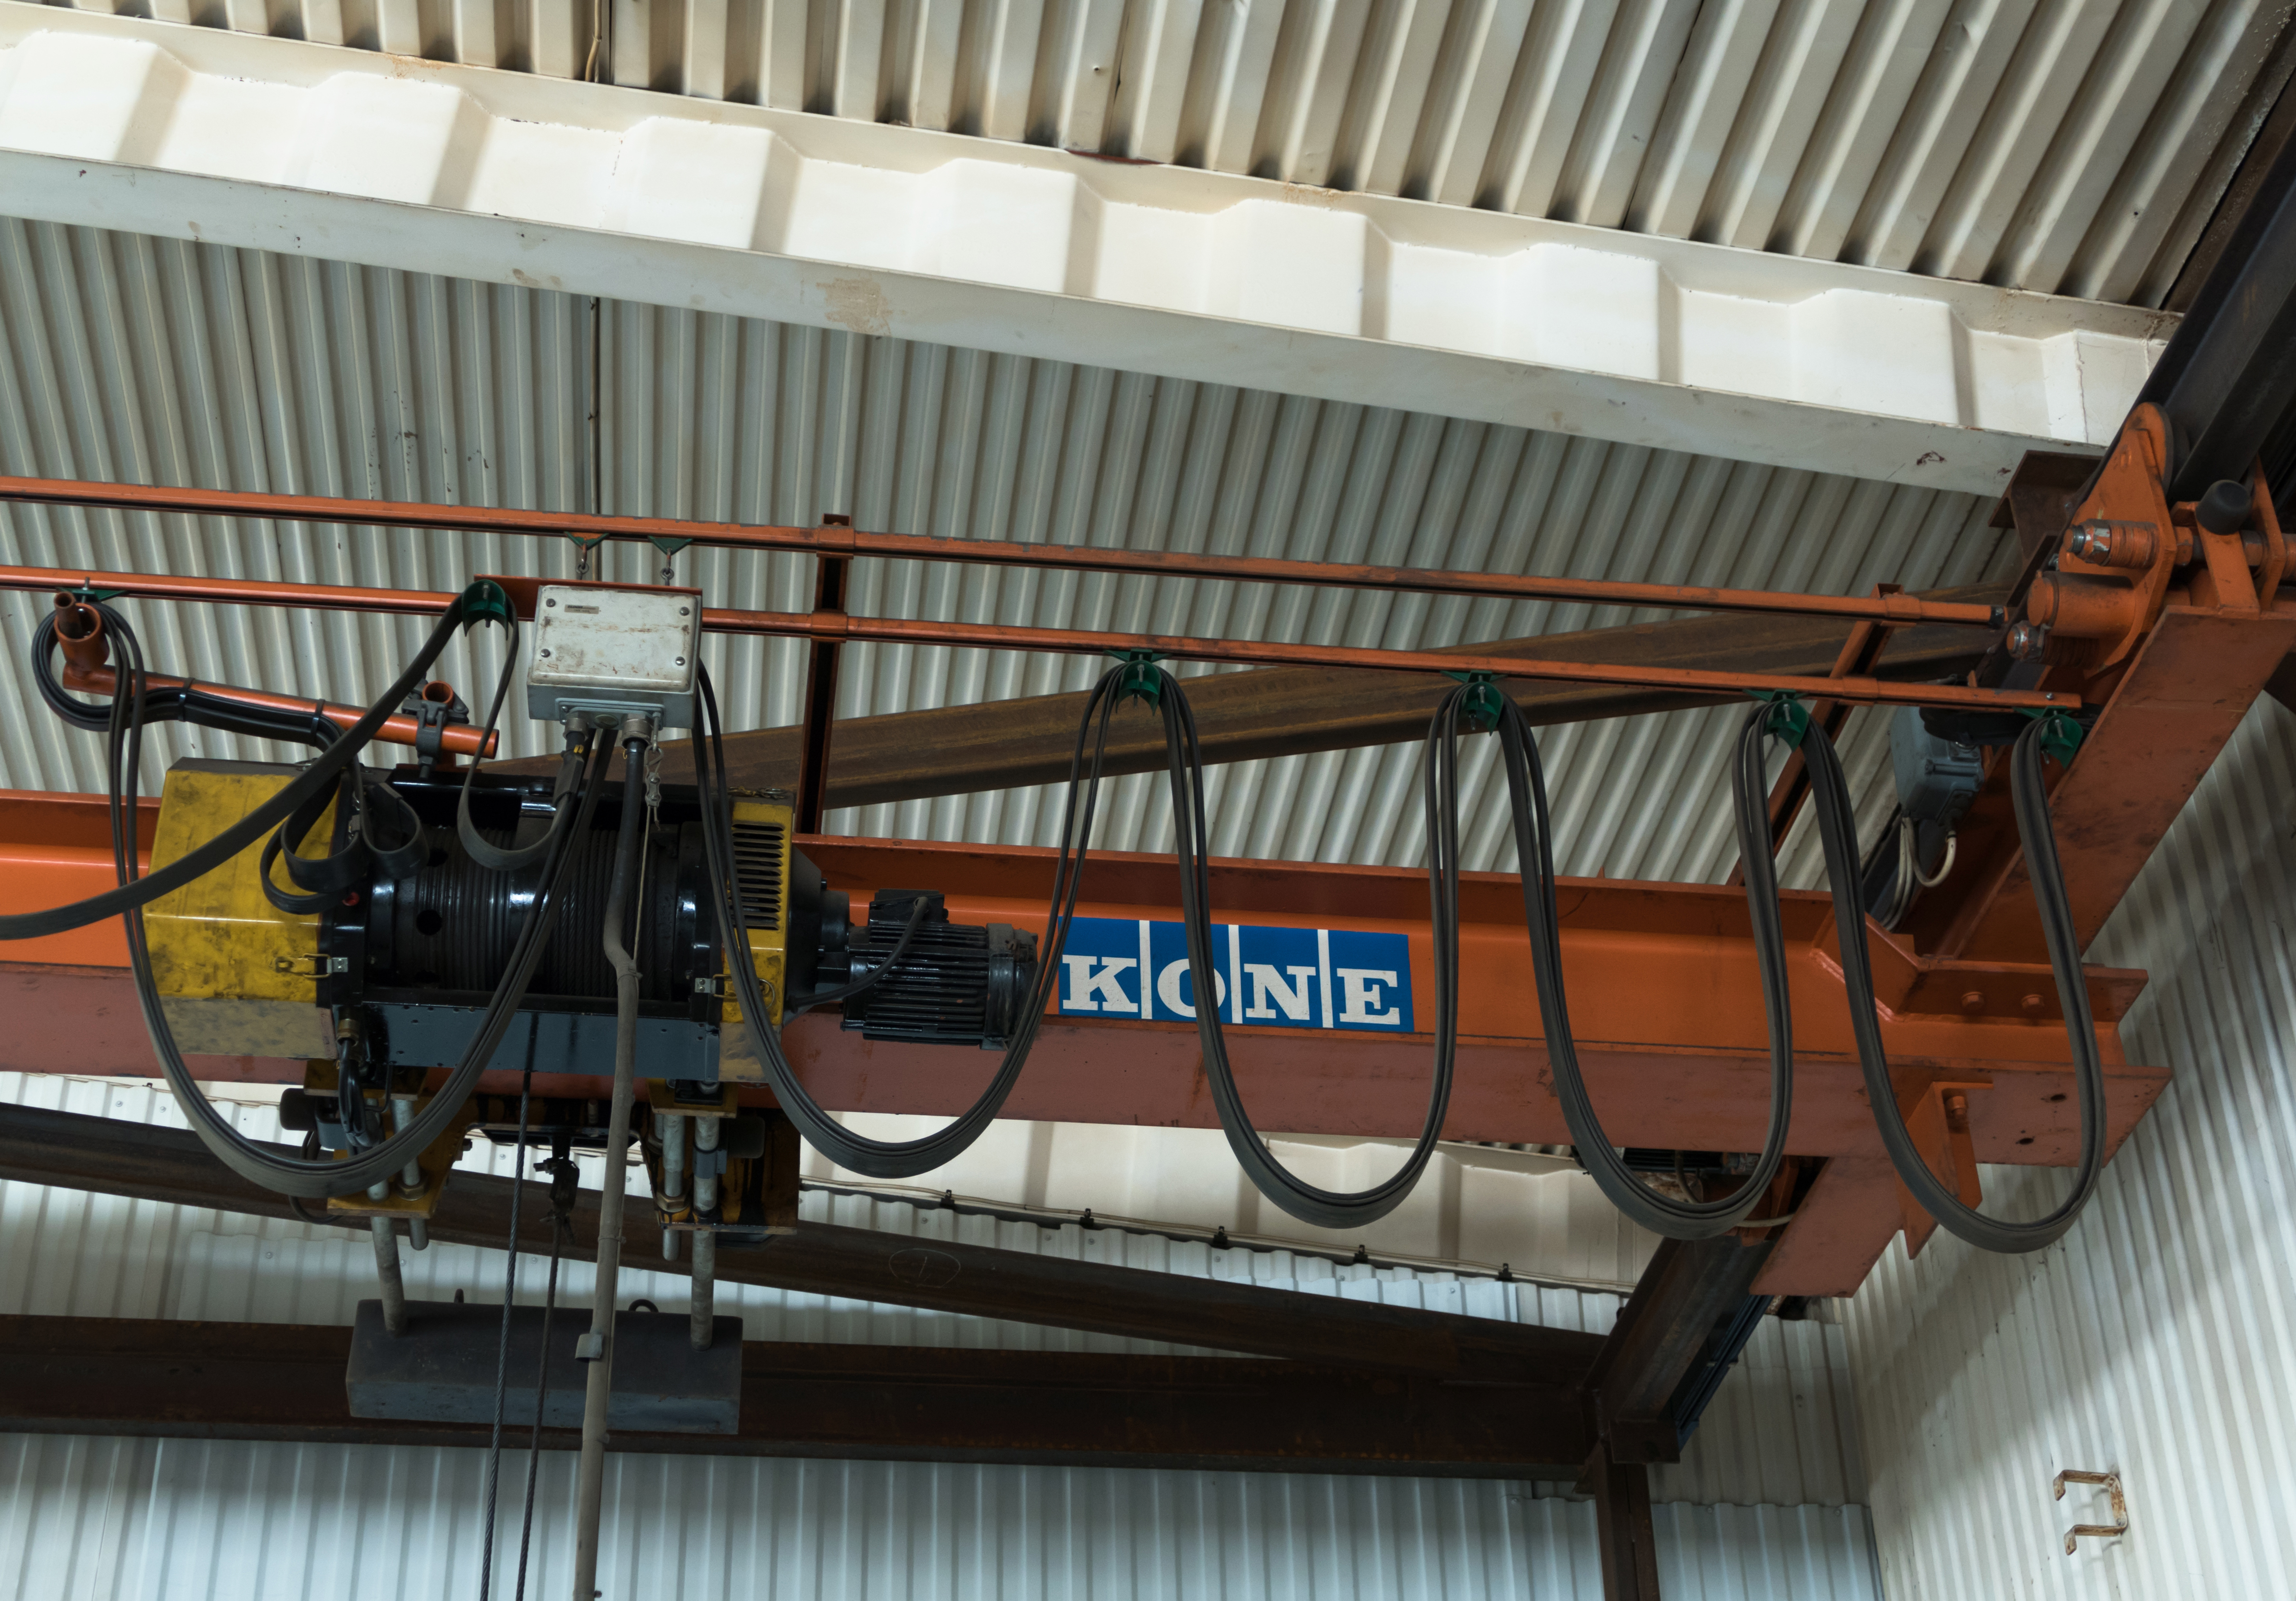 Electric winch on indoor portal crane